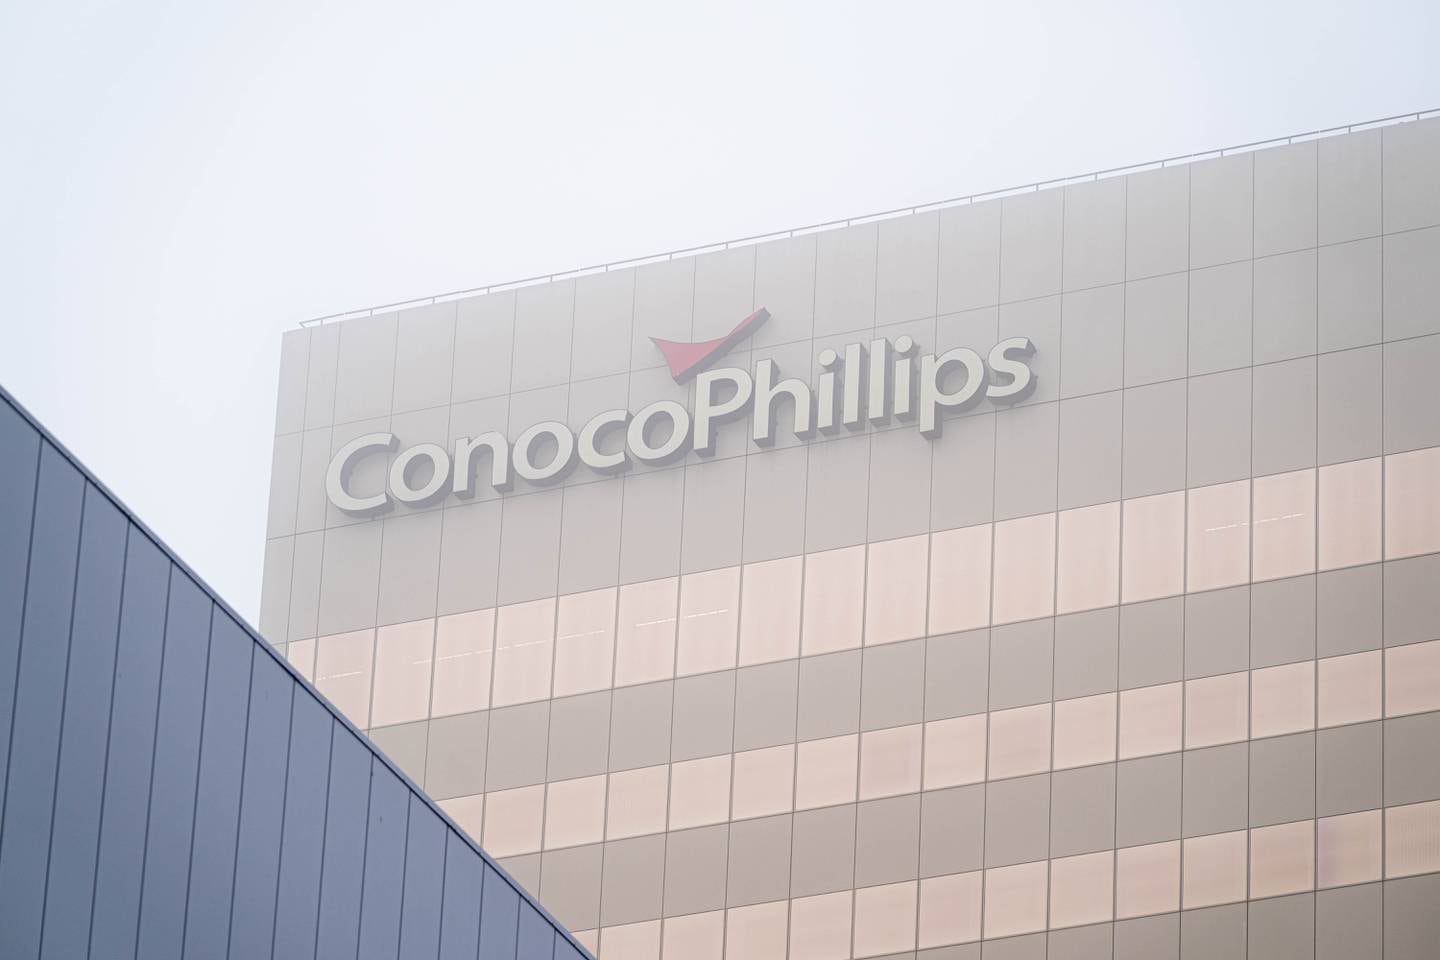 Conoco, conoco phillips, conocophillips, downtown, downtown anchorage, fog, foggy, oil, oil & gas, oil and gas